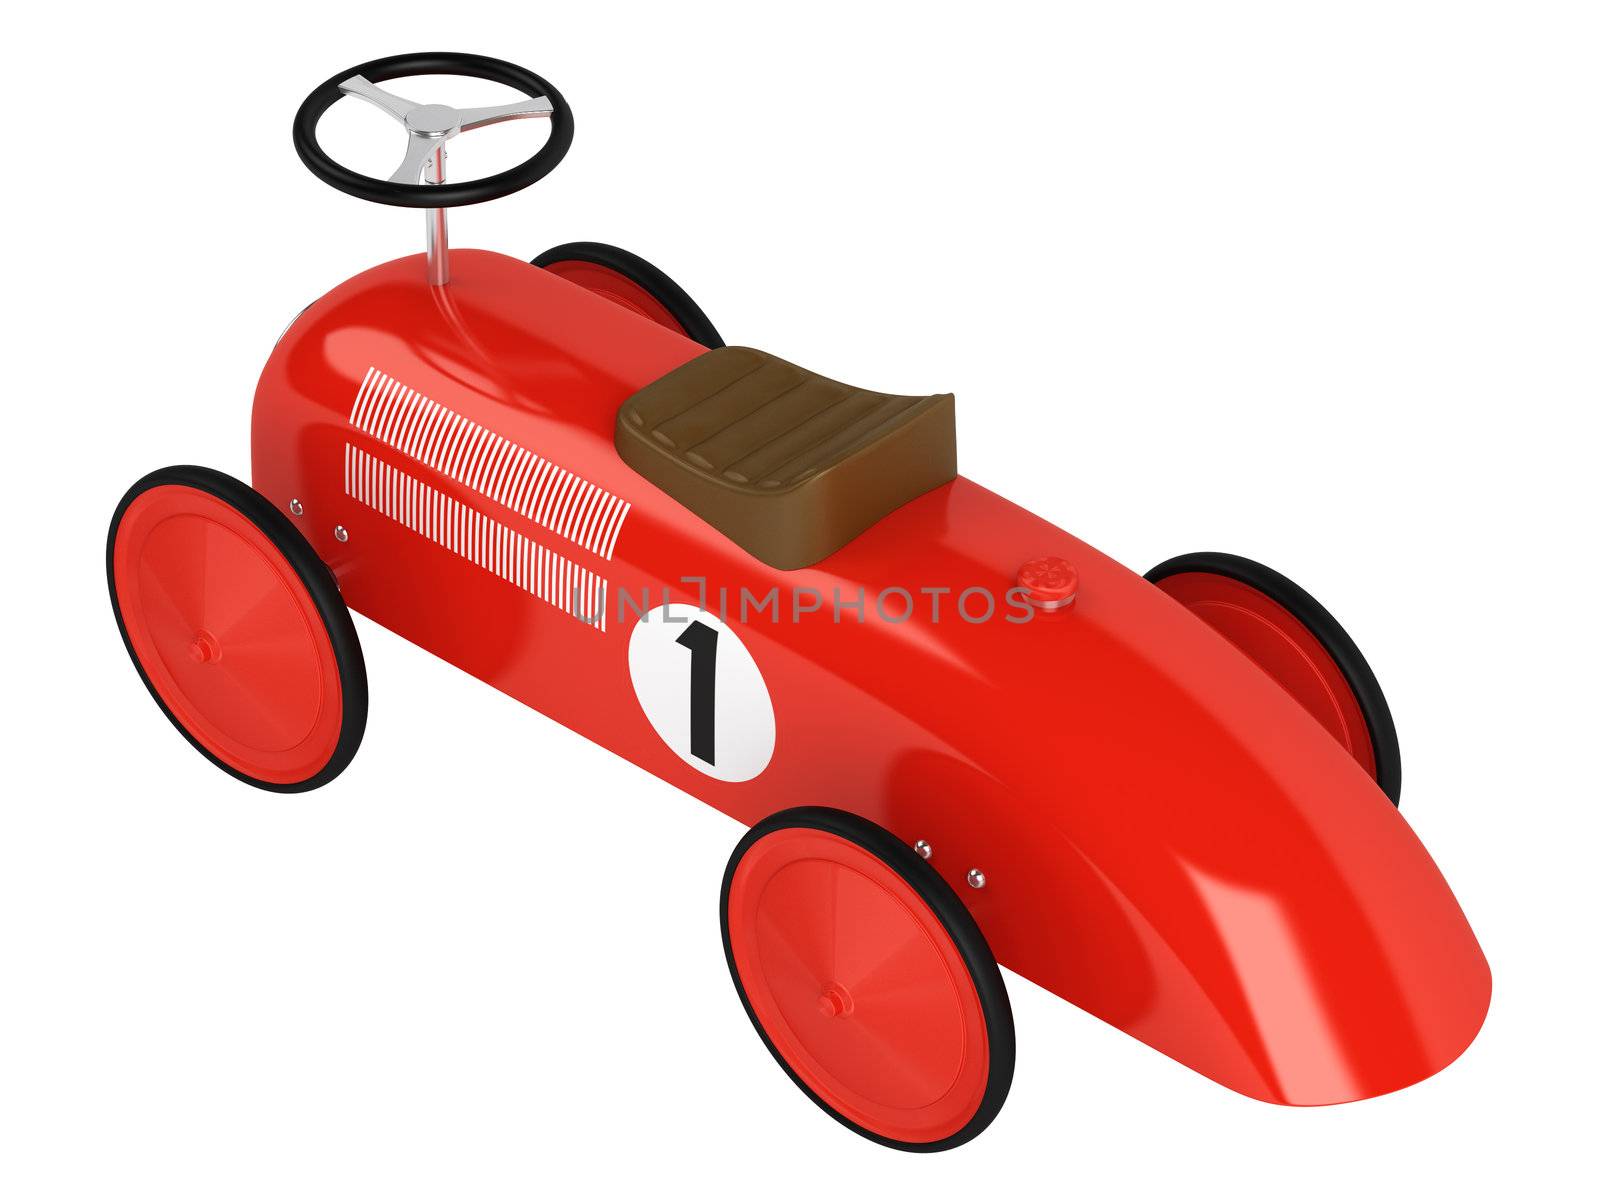 Toy racing car by AlexanderMorozov